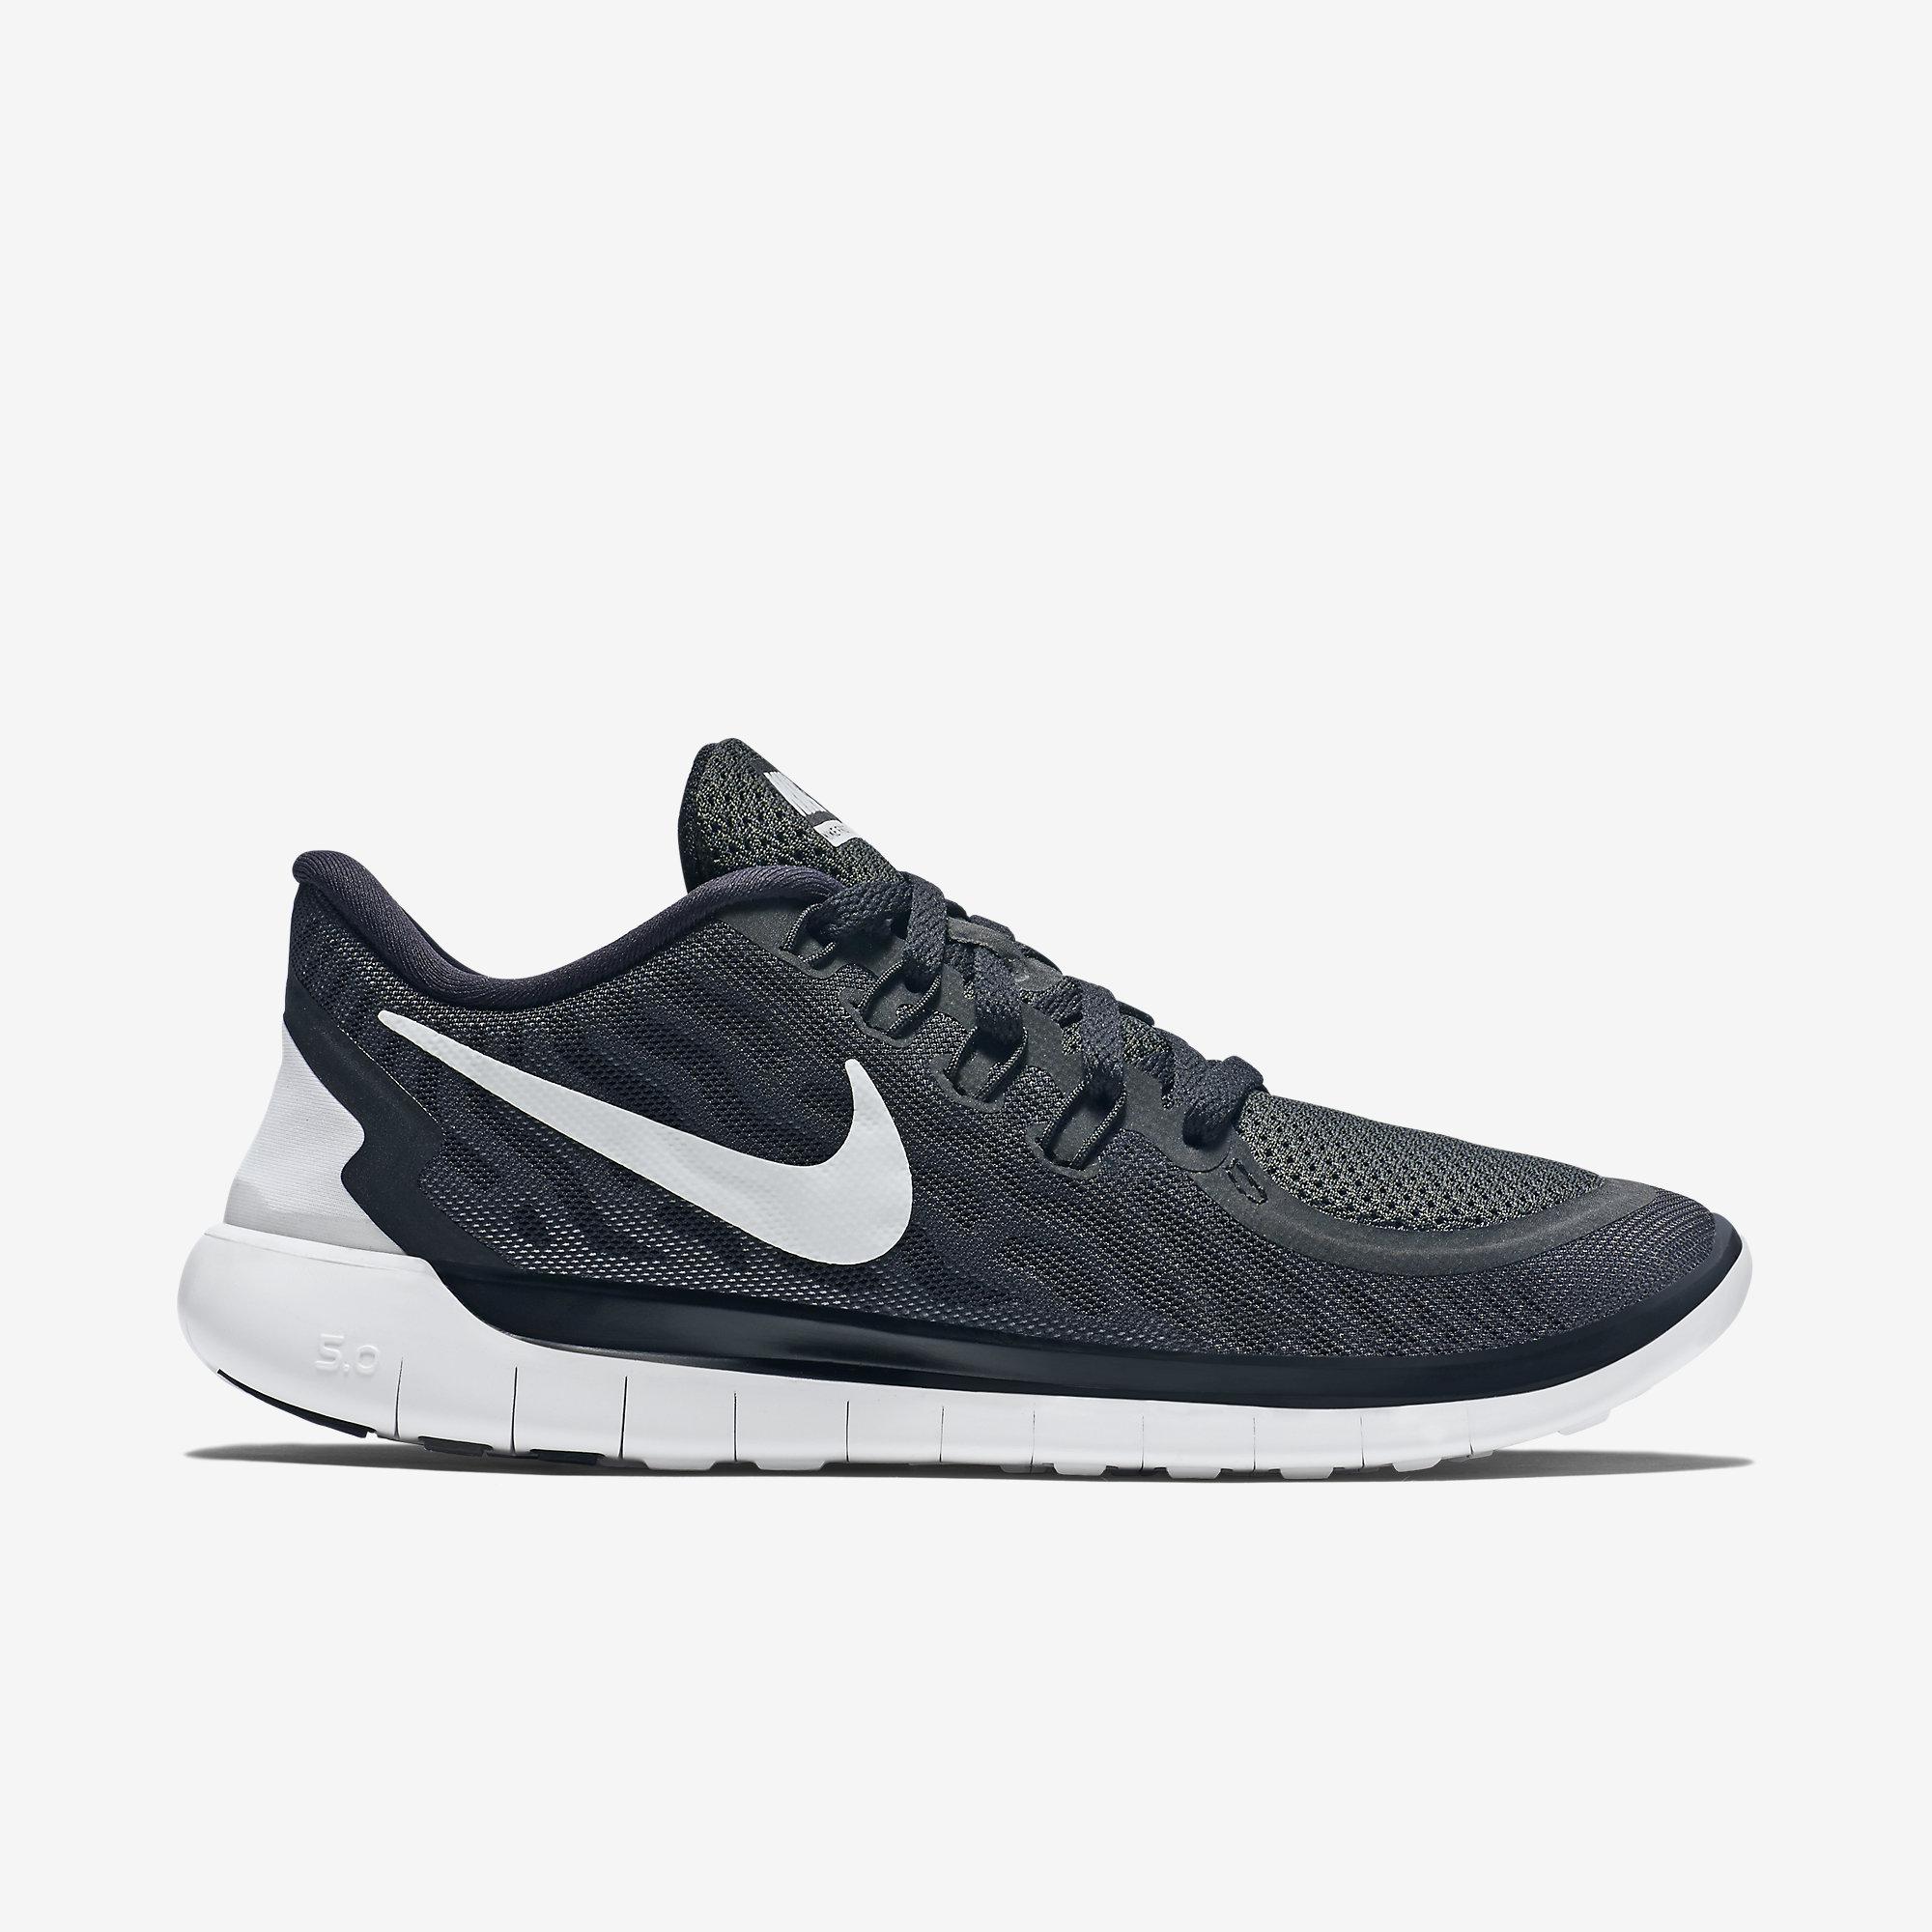 Nike Womens Free 5.0 Running Shoes - Black/Grey - Tennisnuts.com